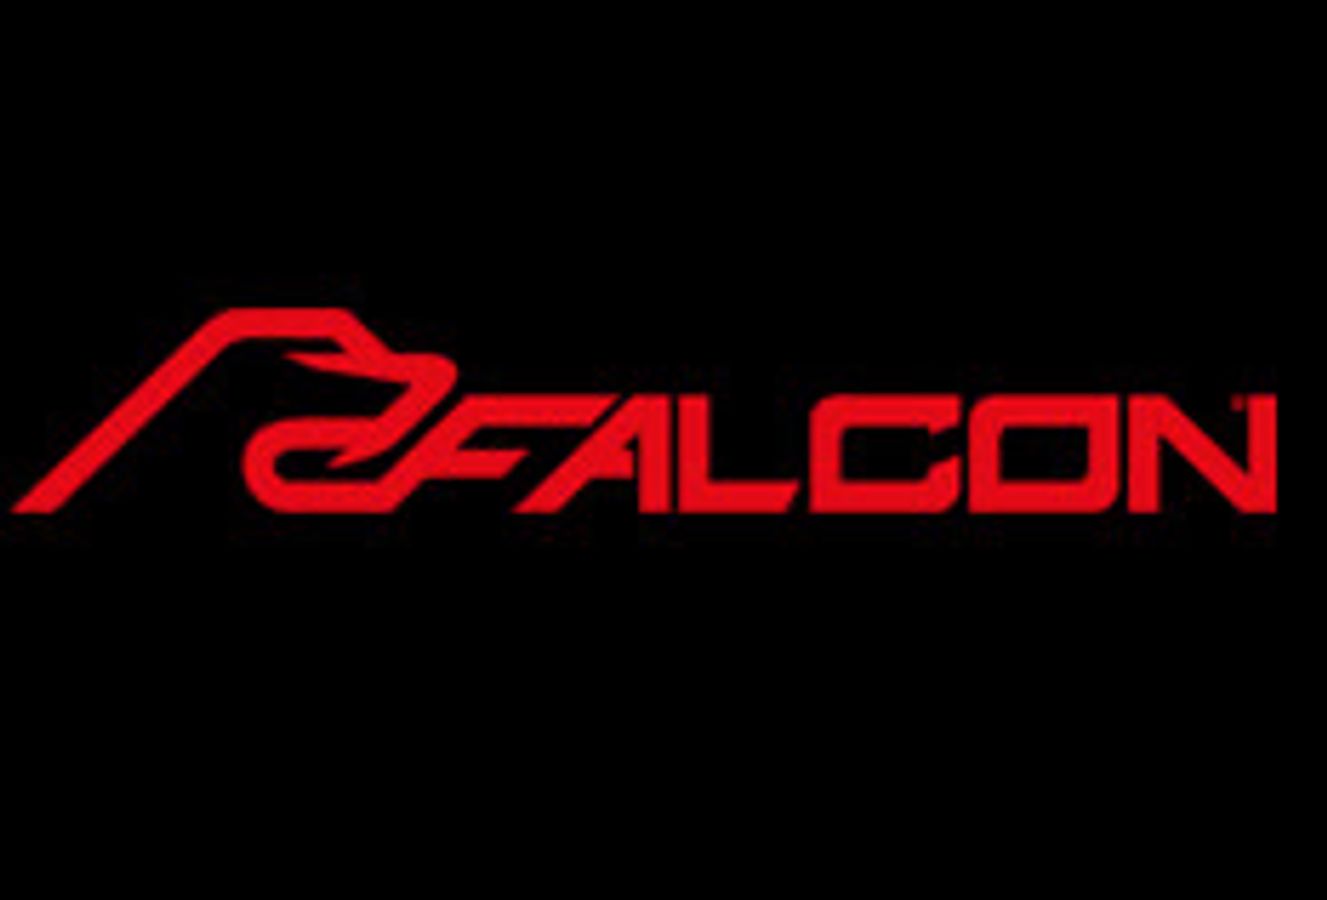 Falcon Studios